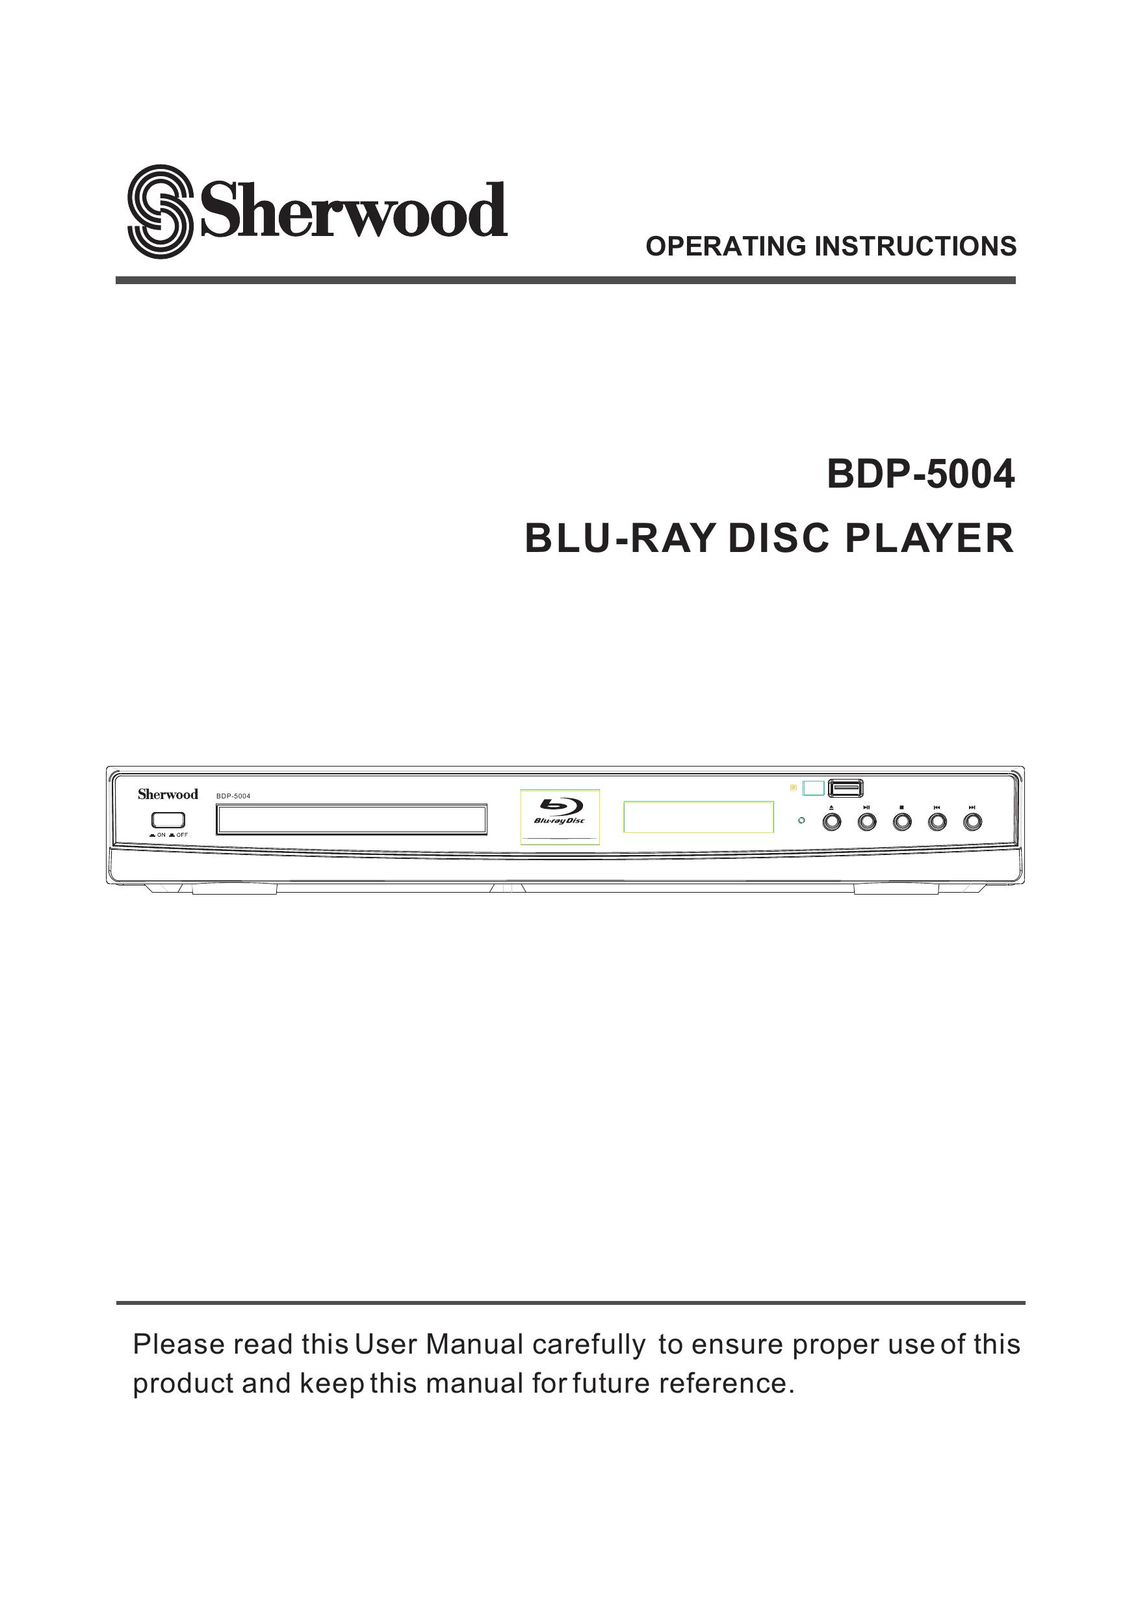 Sherwood BDP-5004 Blu-ray Player User Manual